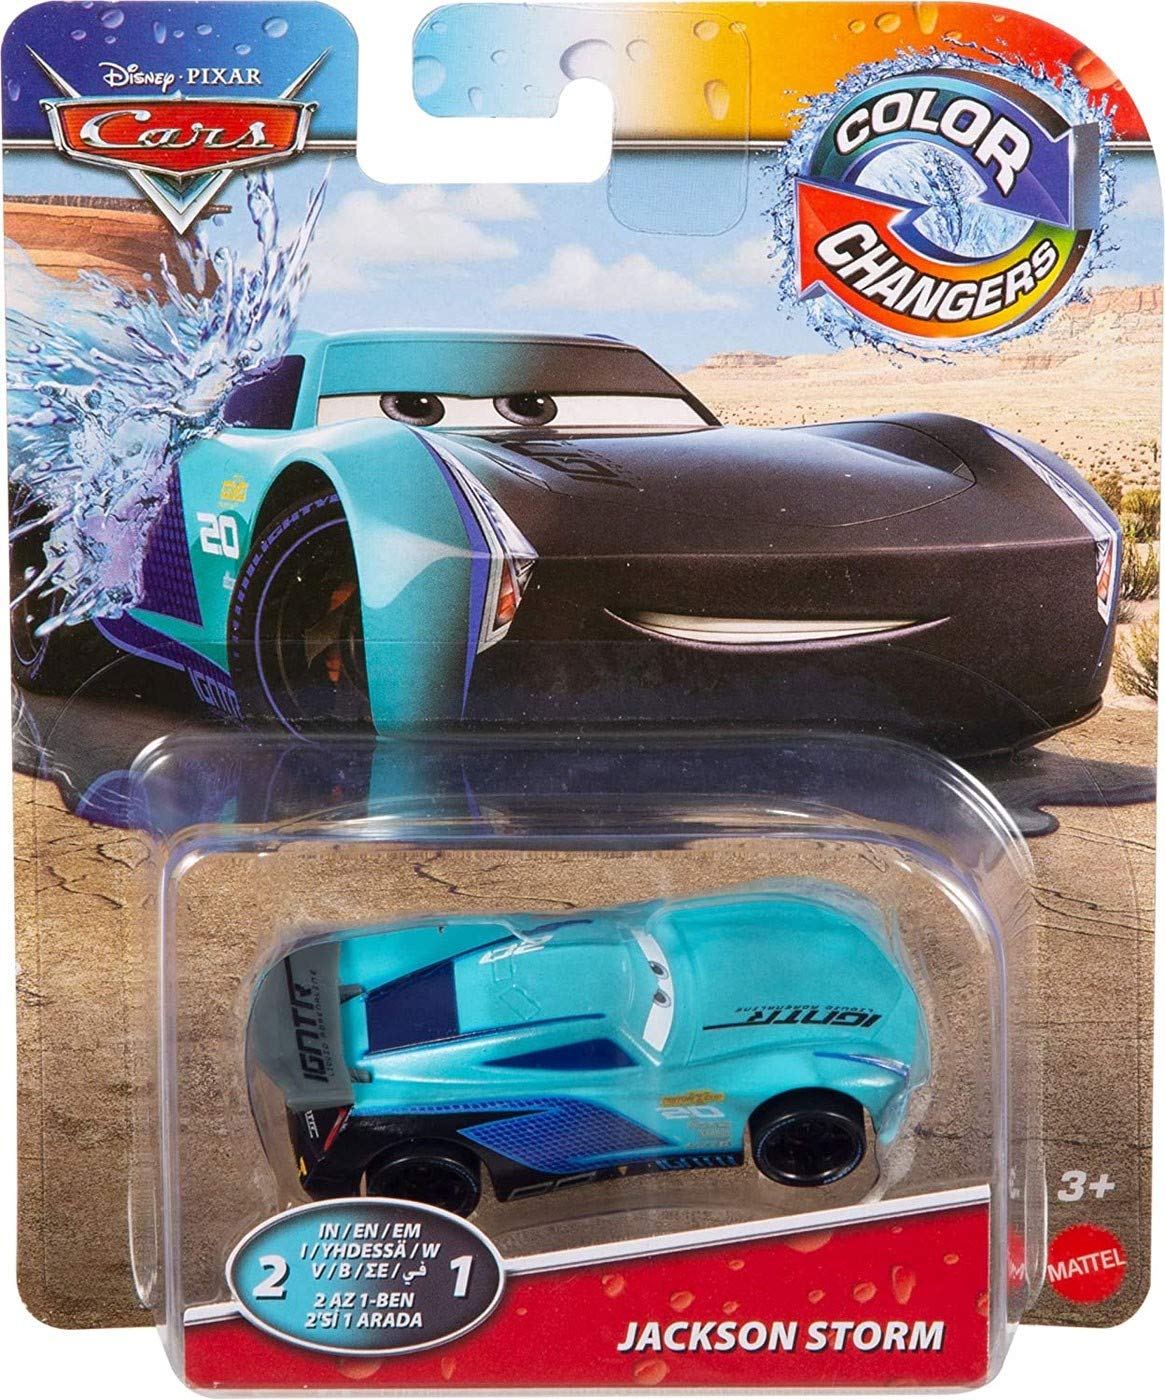 Mattel-Disney Pixar Cars Color Changers-GNY99-Jackson Storm-Legacy Toys